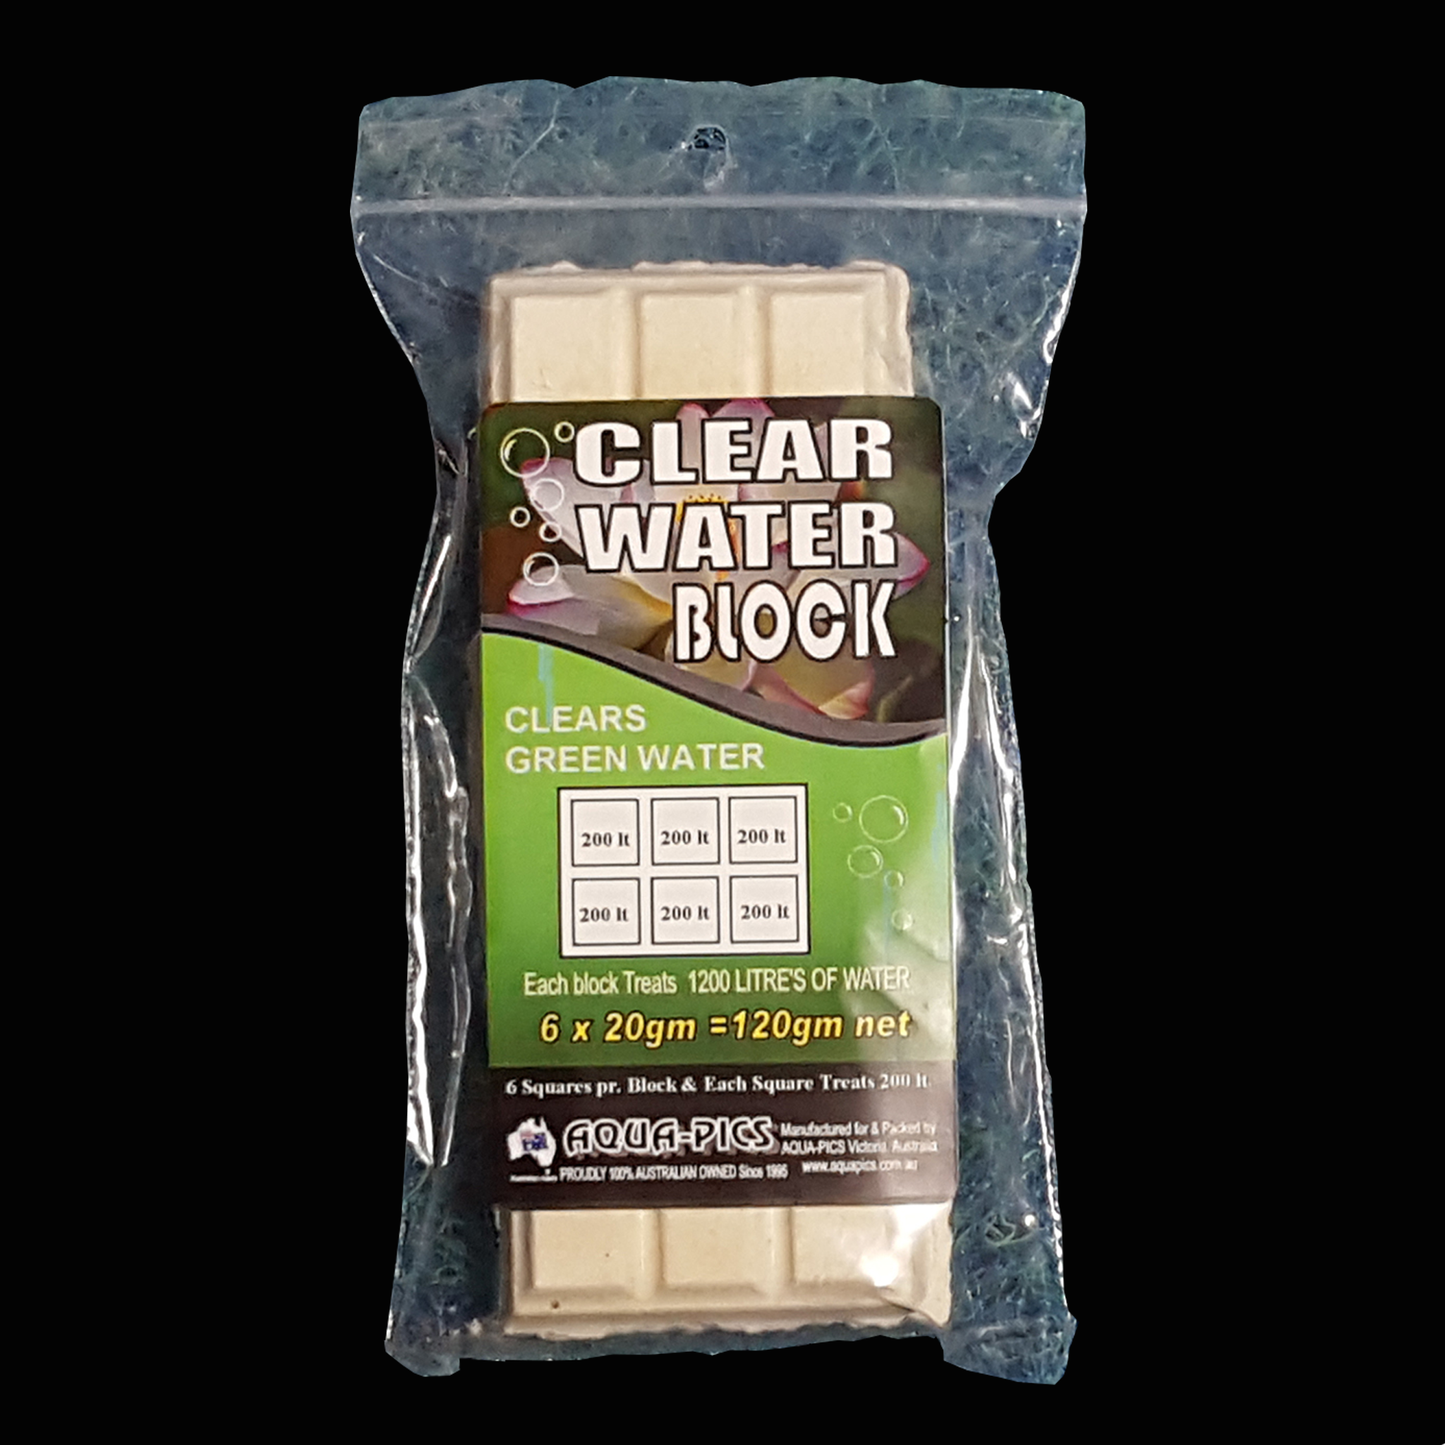 Clear Water Algae Blocks 6 packs Treats 7200 litres